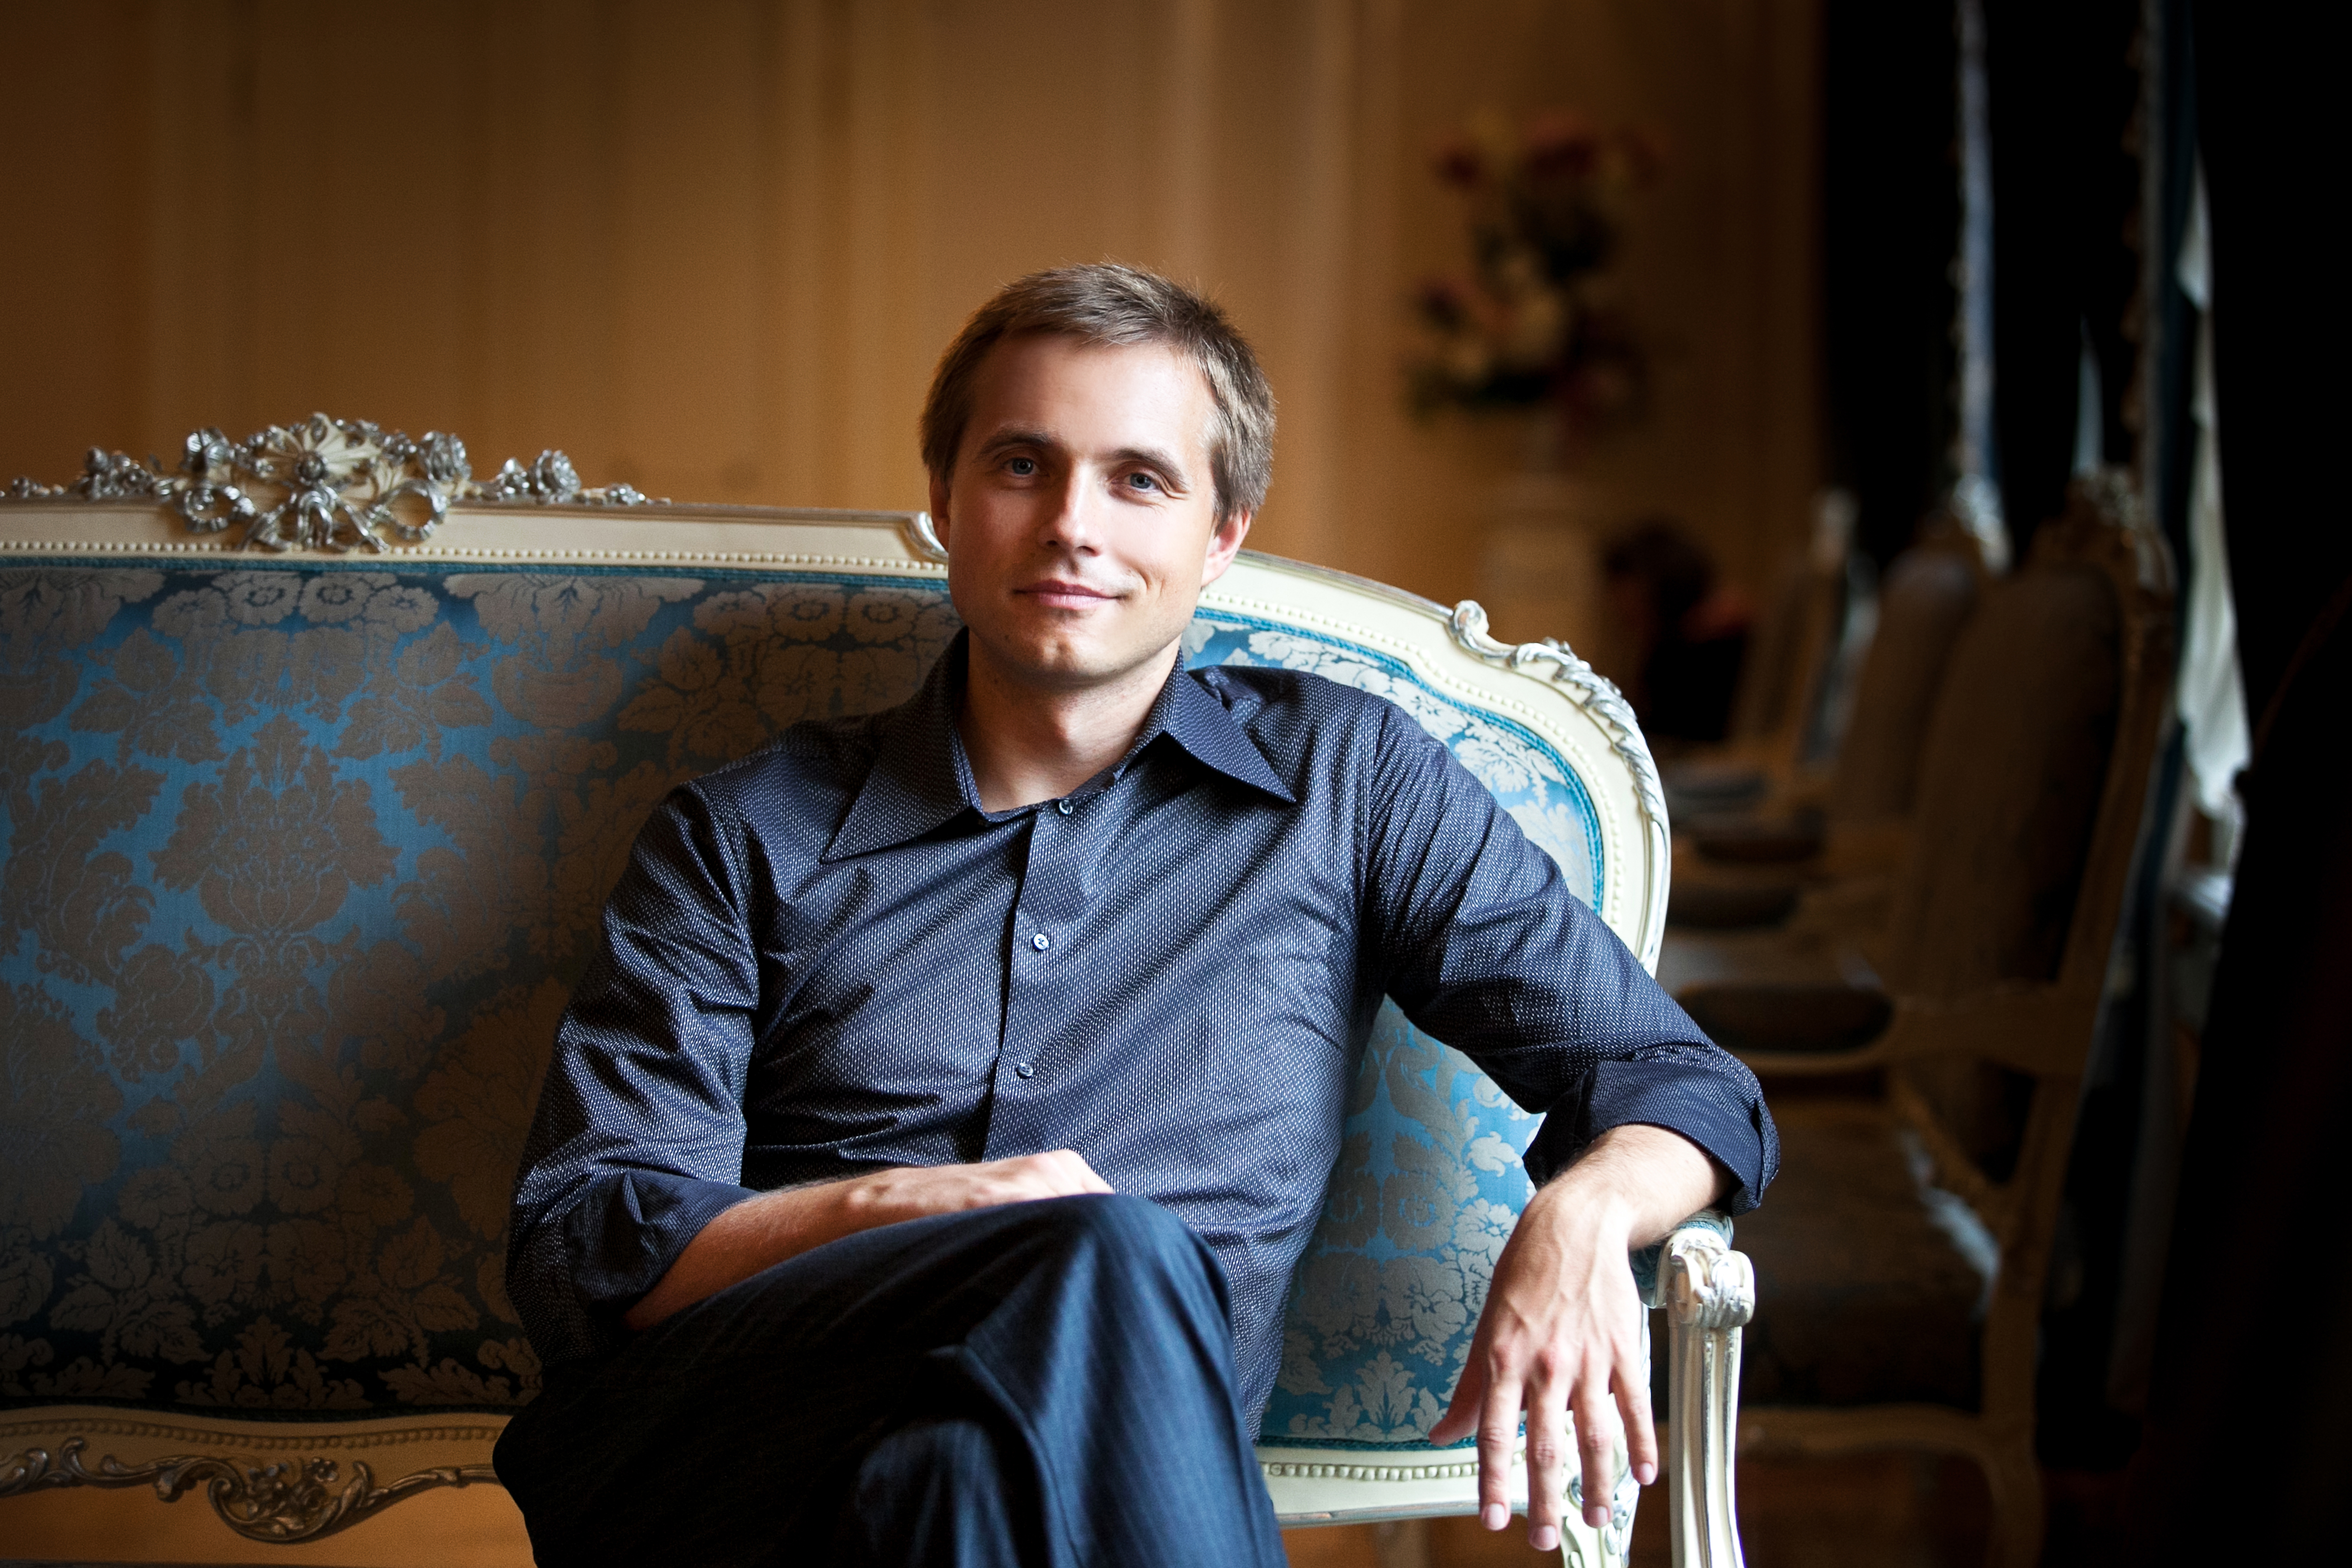 Vasily Petrenko smiling, sitting on an ornate sofa